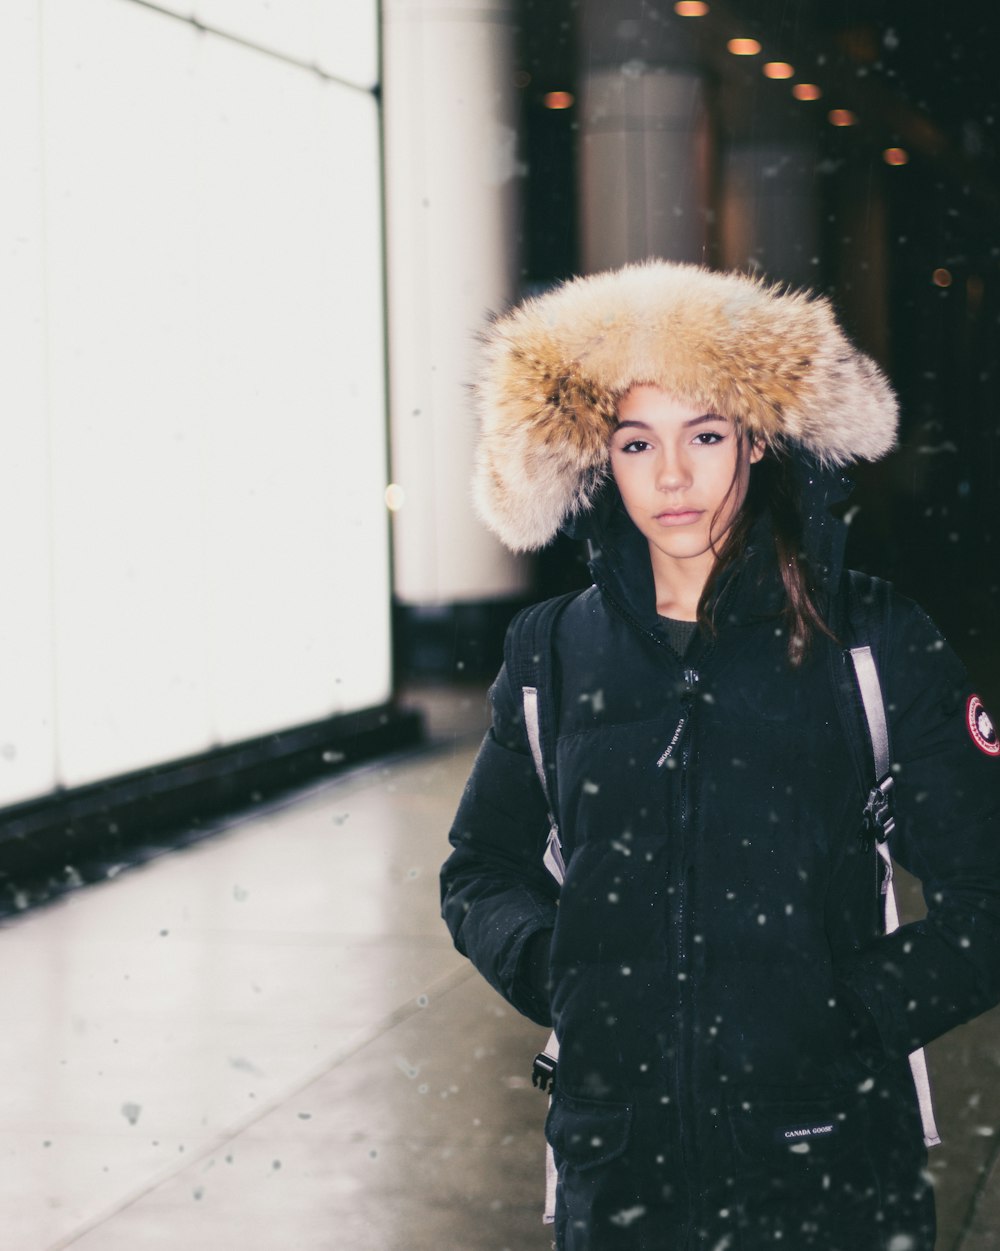 donna in giacca parka nera in piedi mentre nevica